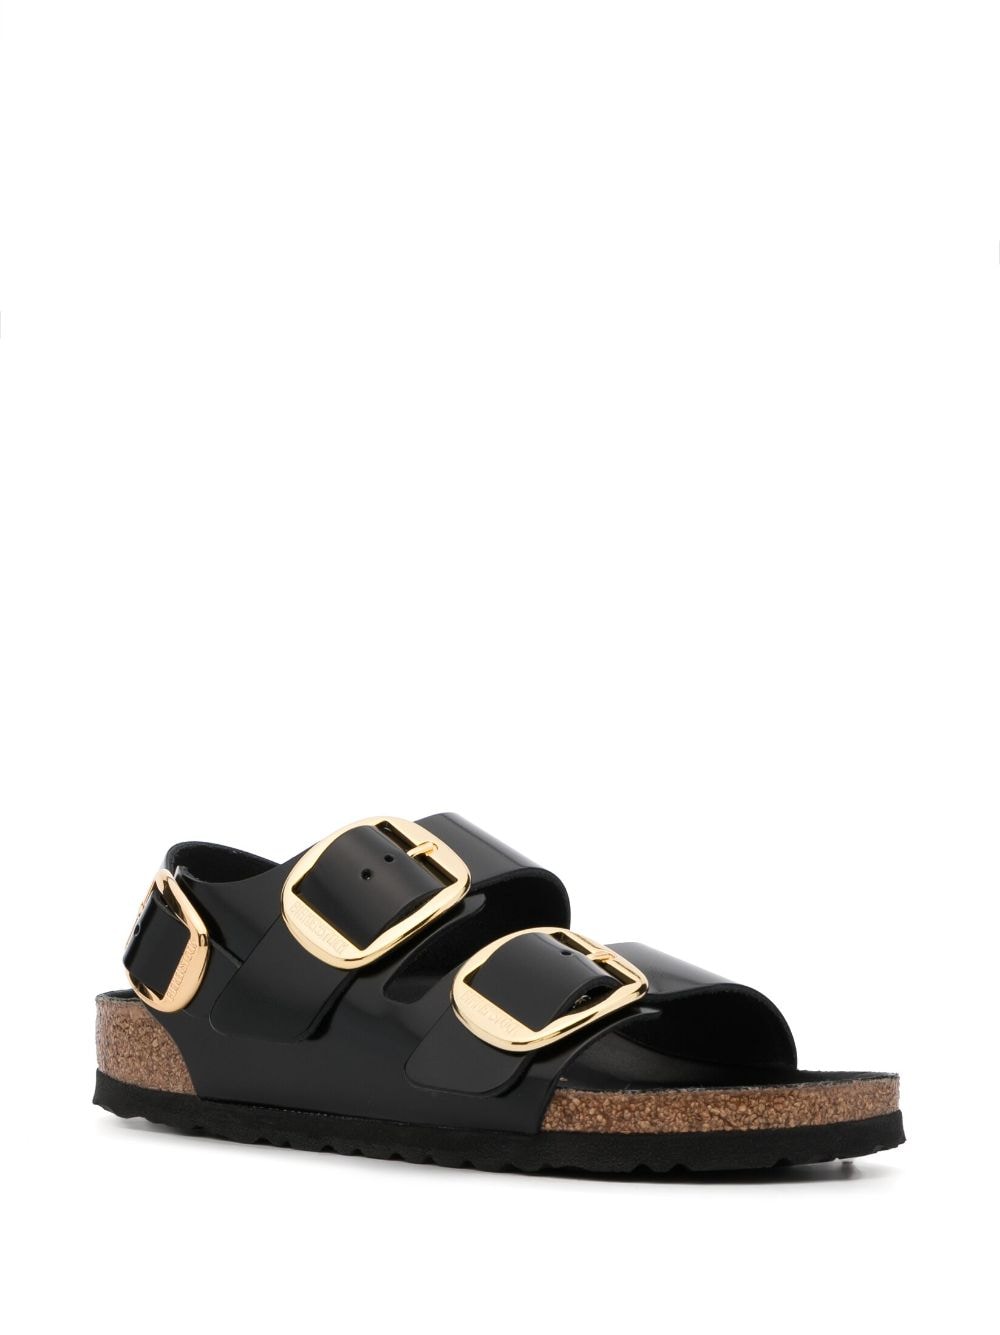 Image 2 of Birkenstock Milano leather flat sandals